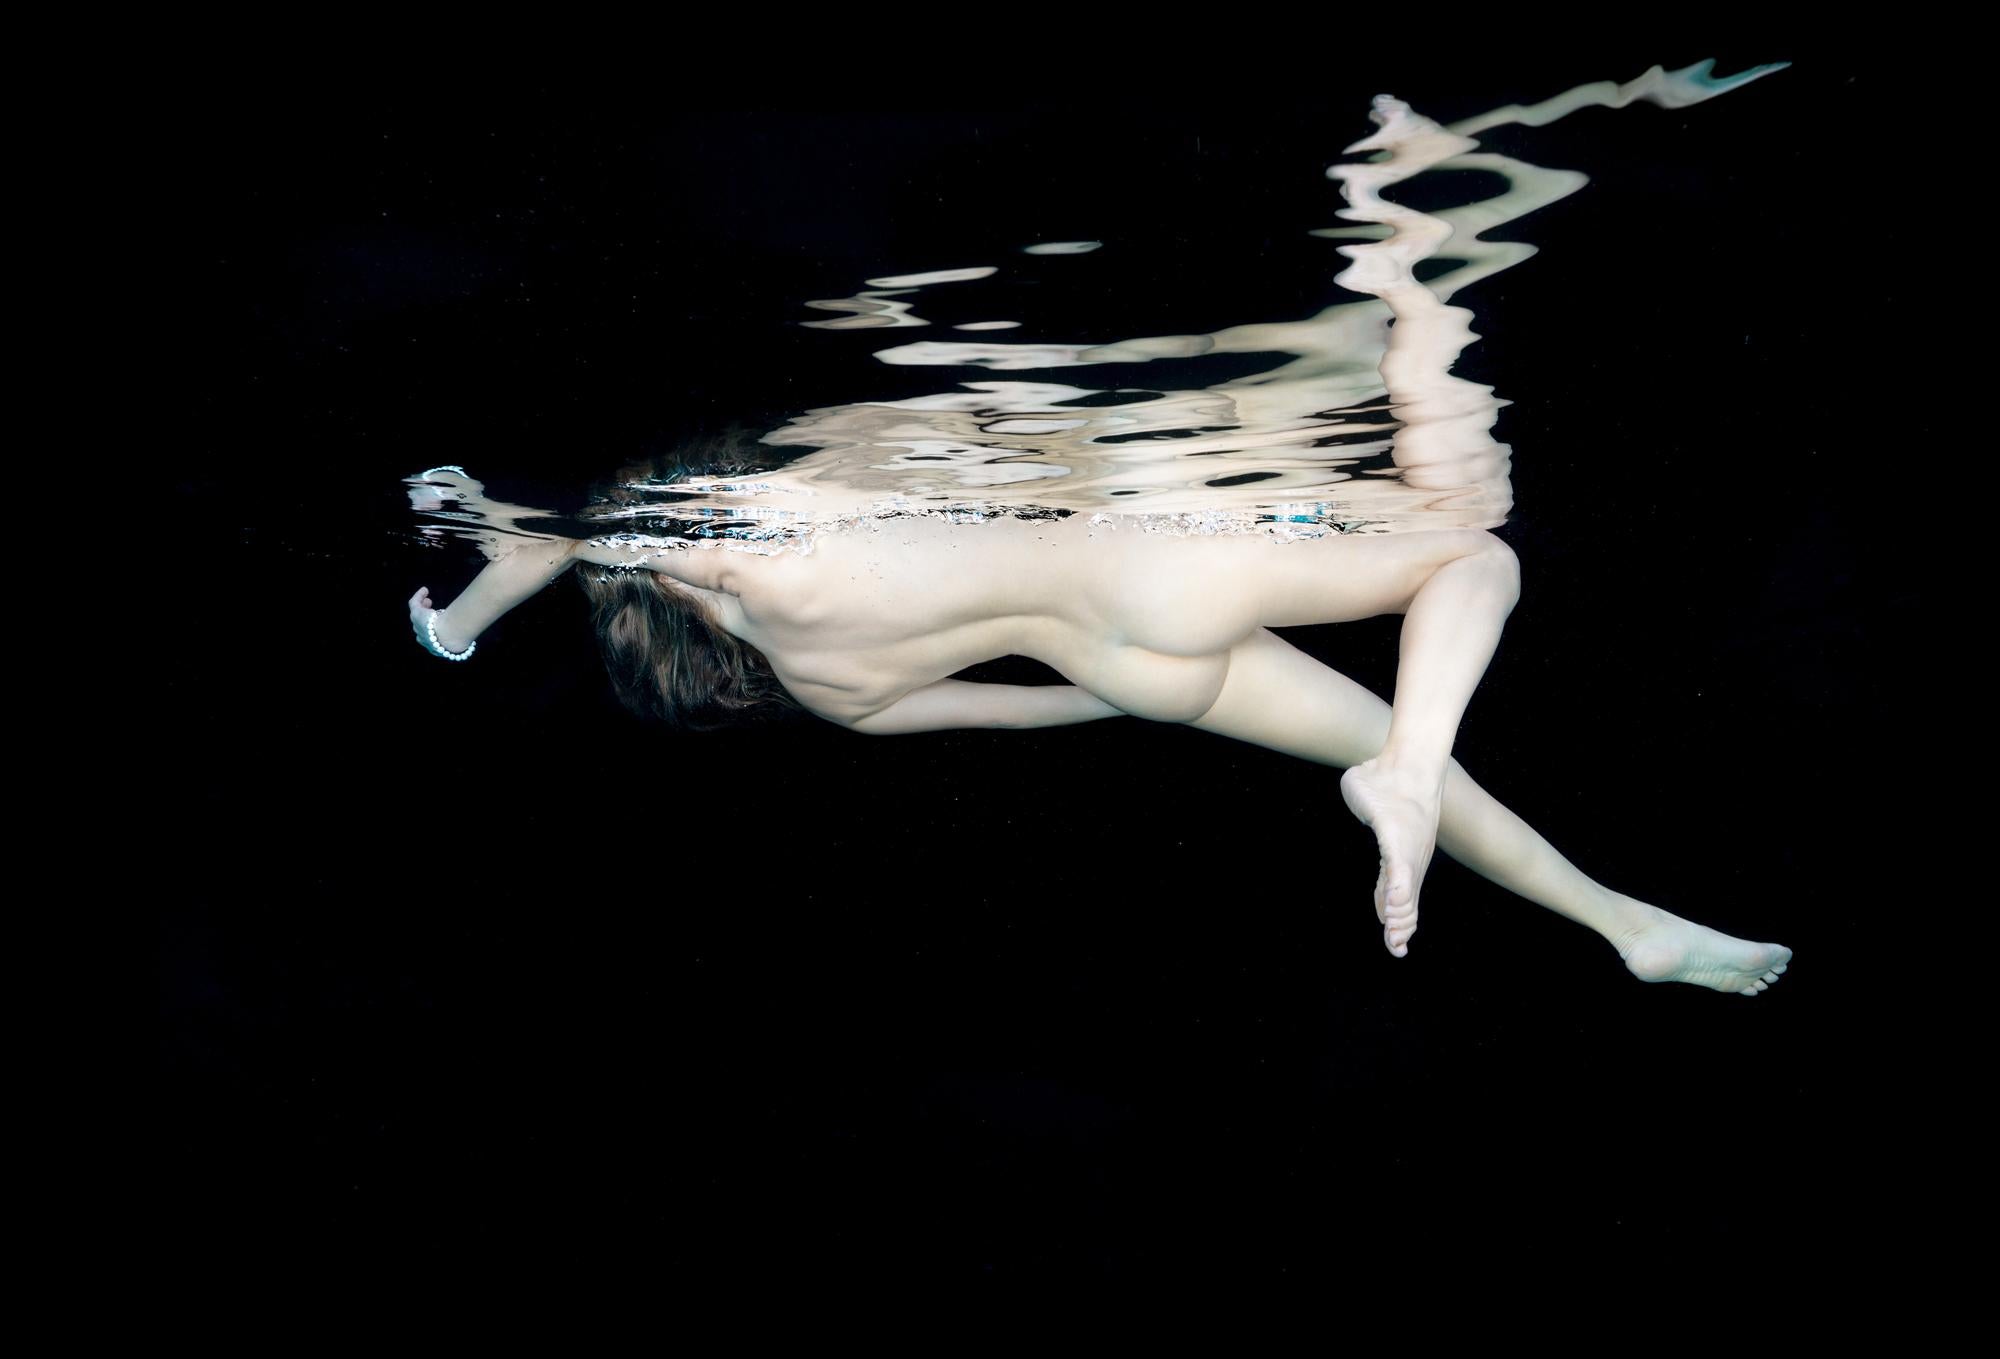 Porcelain II  - underwater nude photograph - print on paper 18" х 24"